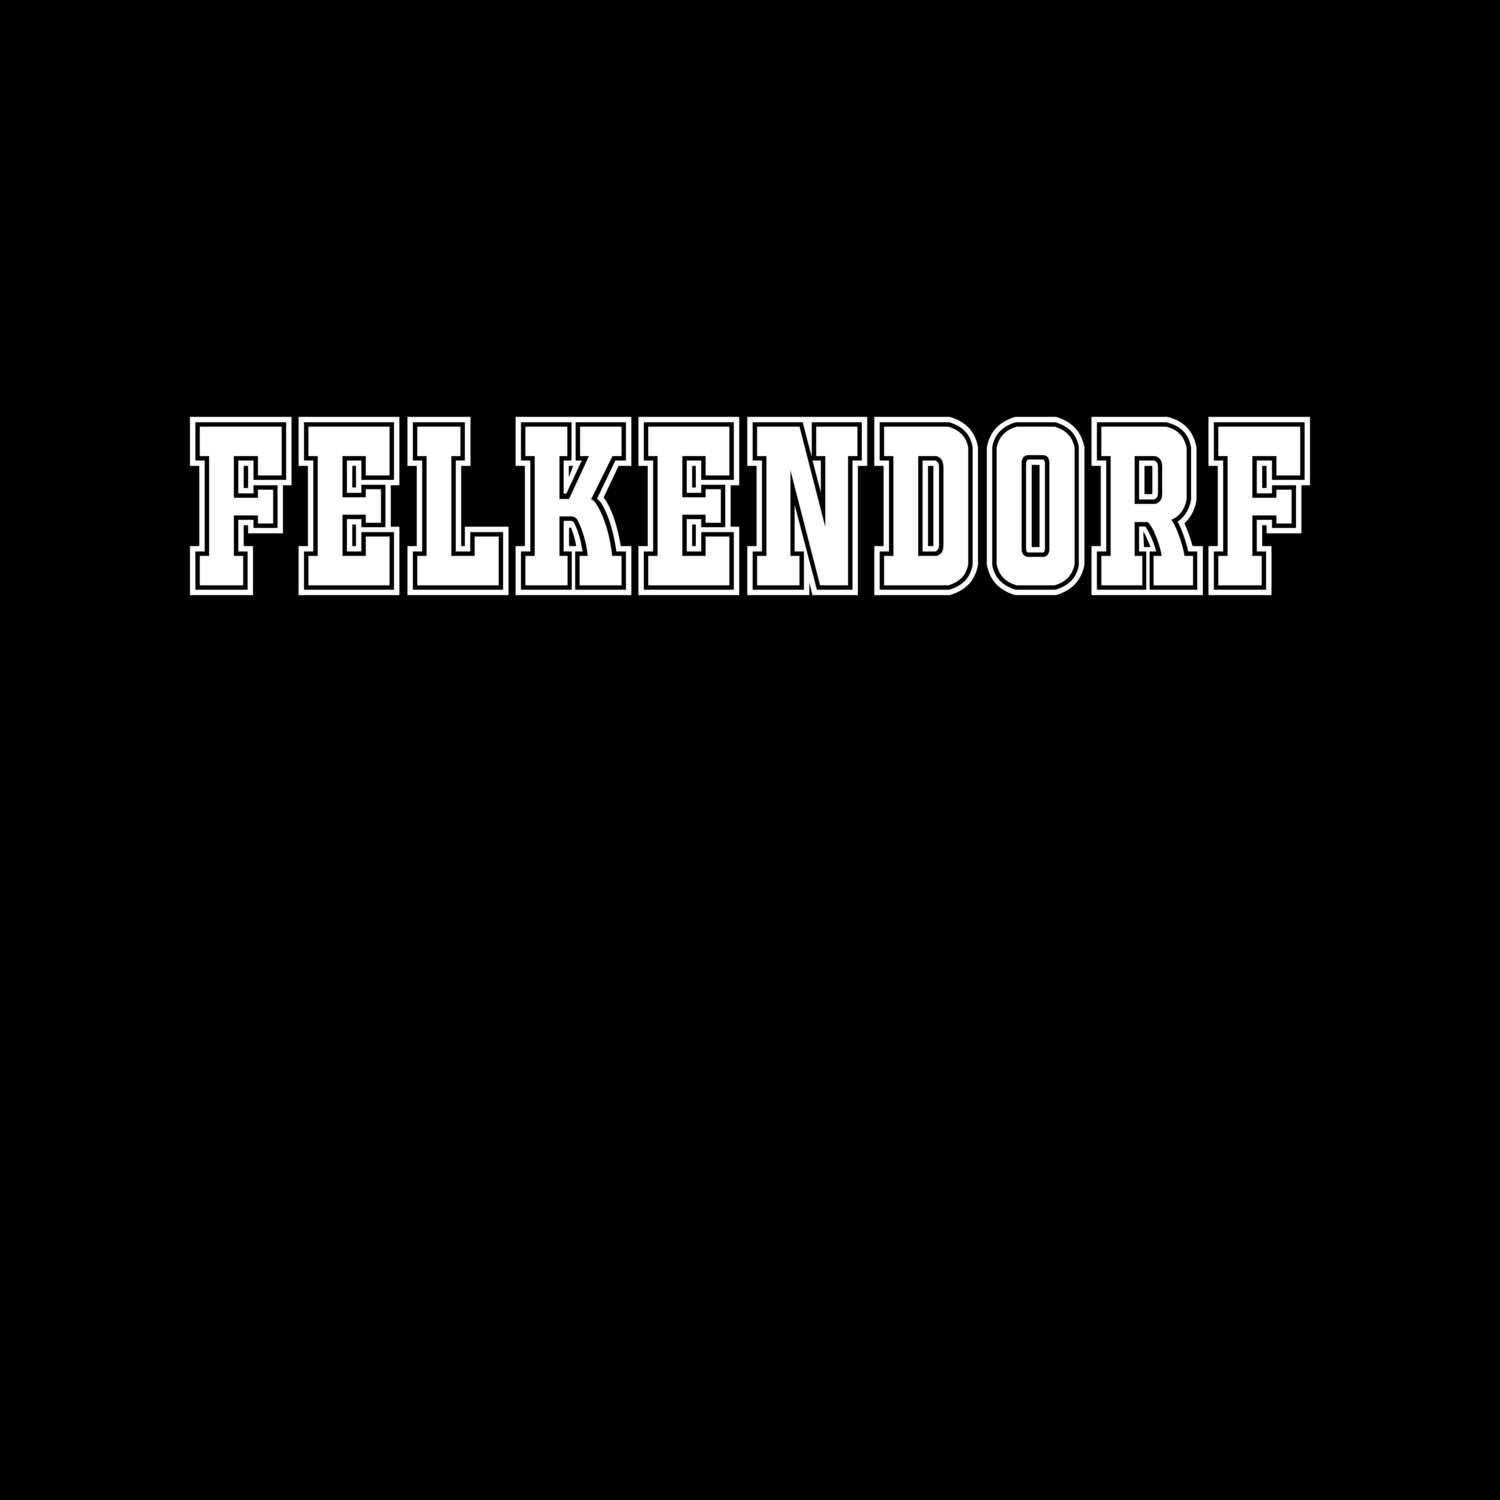 Felkendorf T-Shirt »Classic«